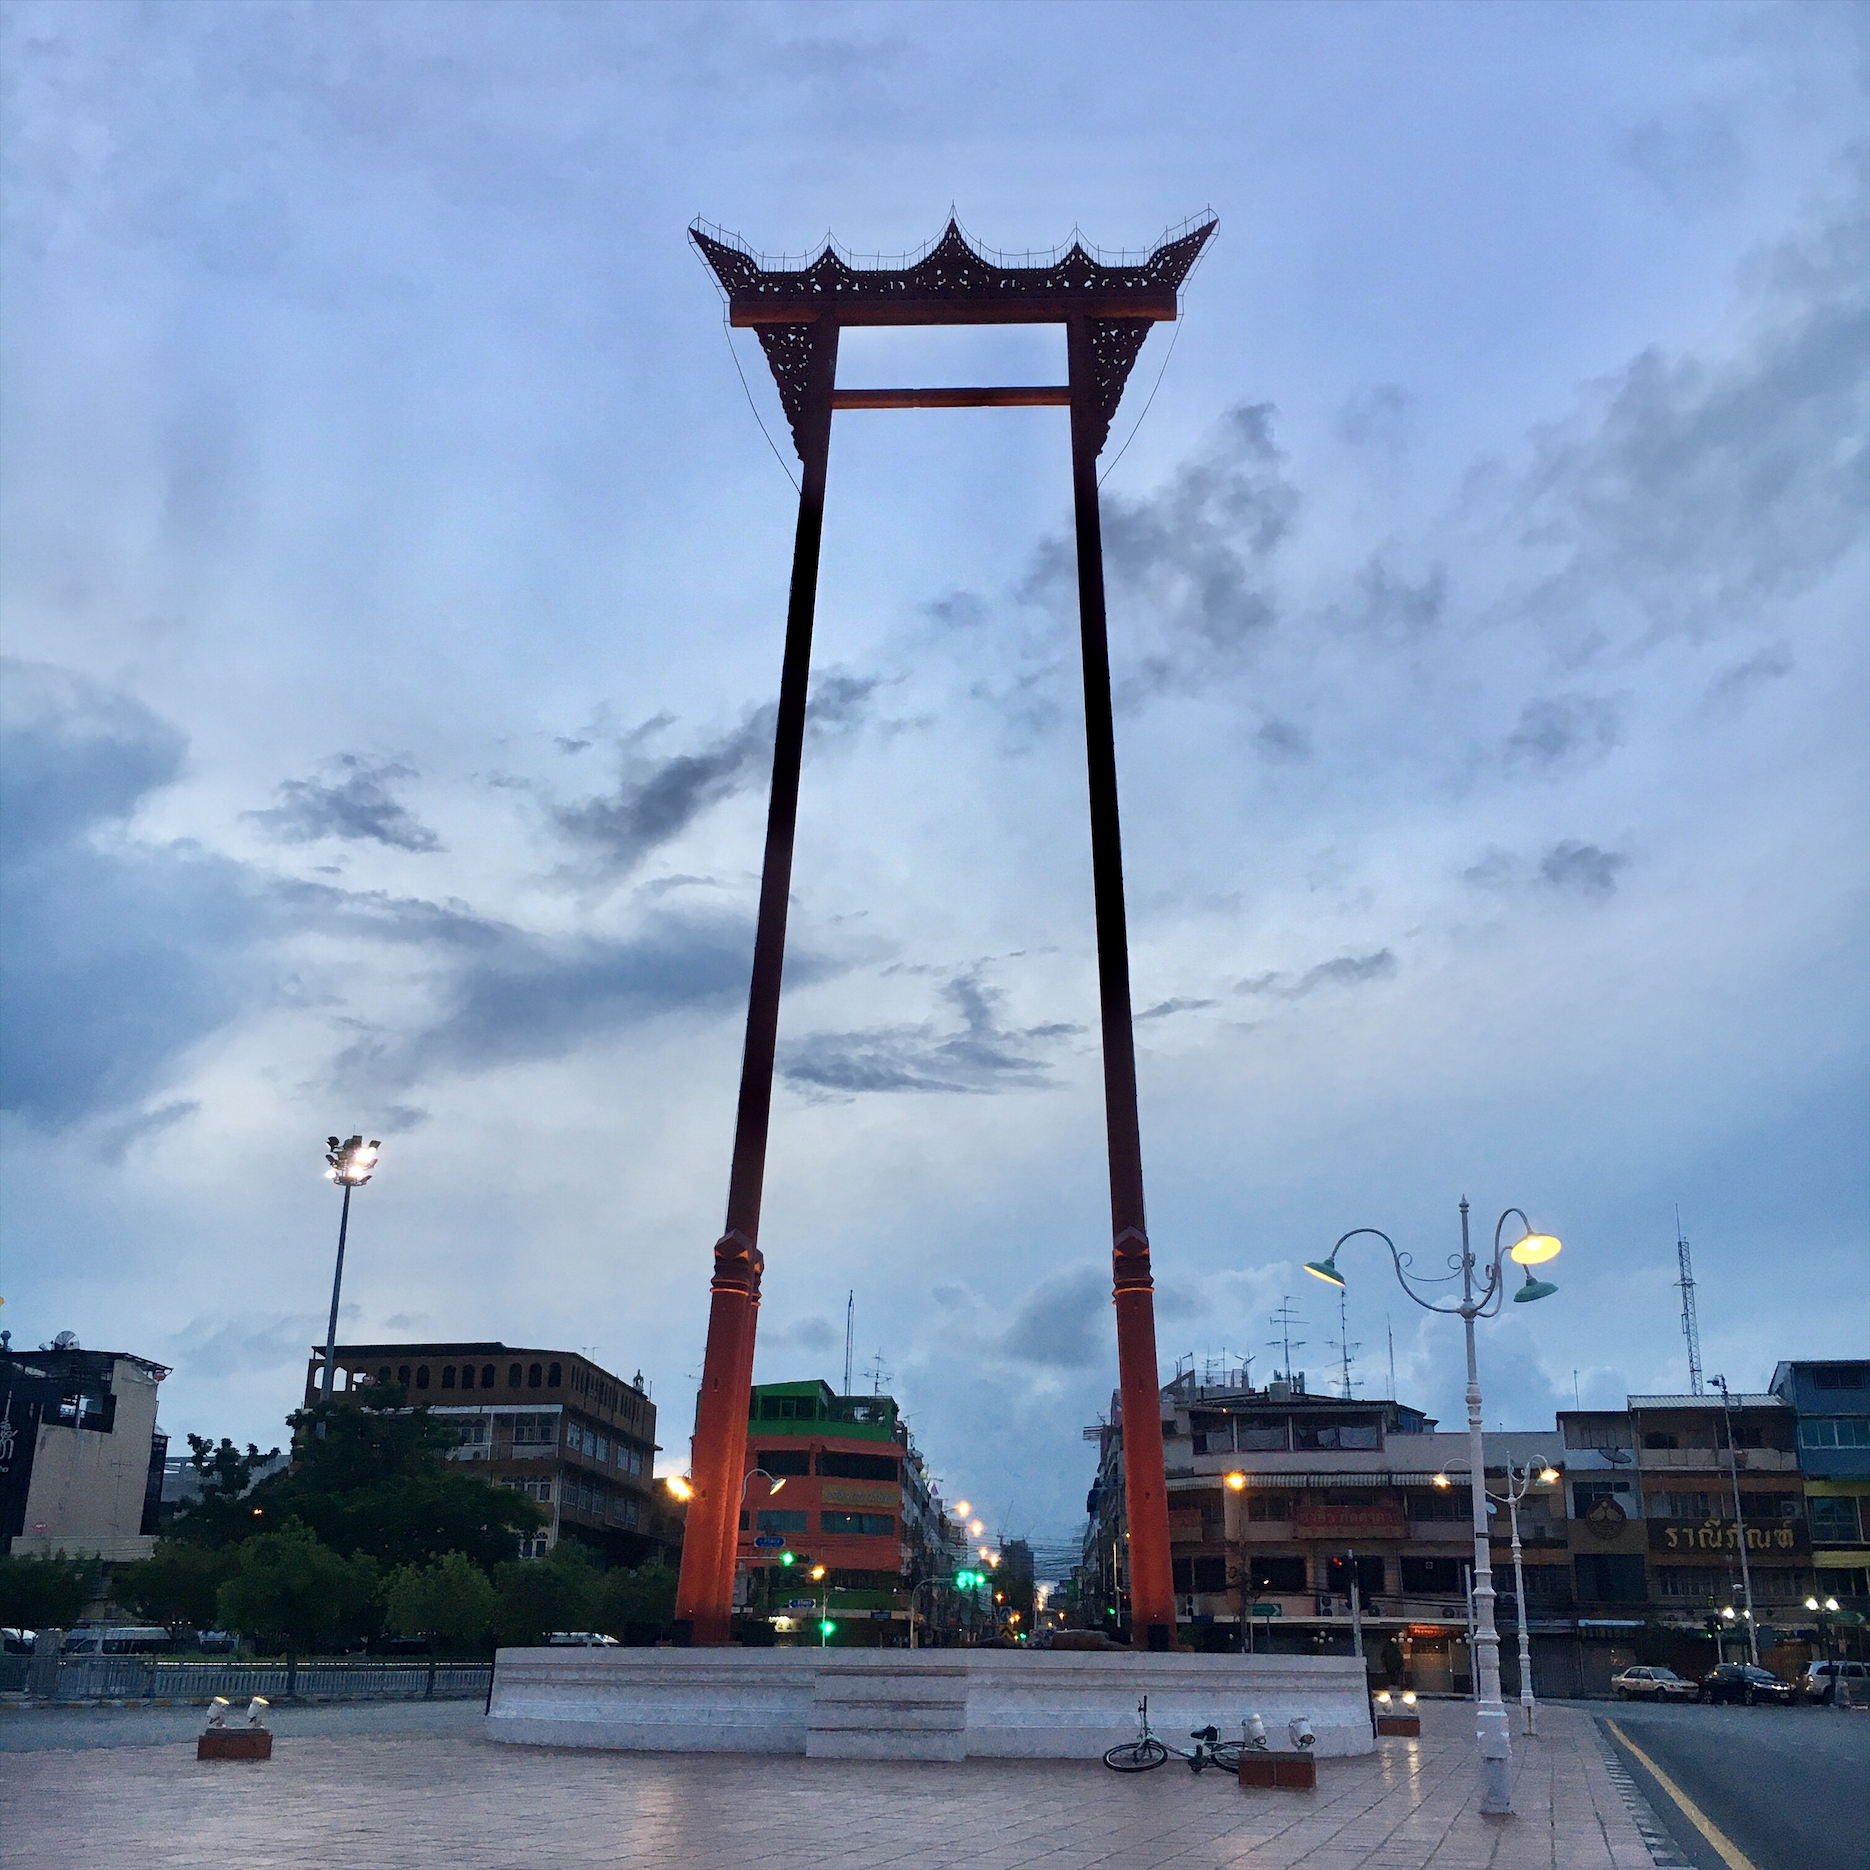 Giant swing